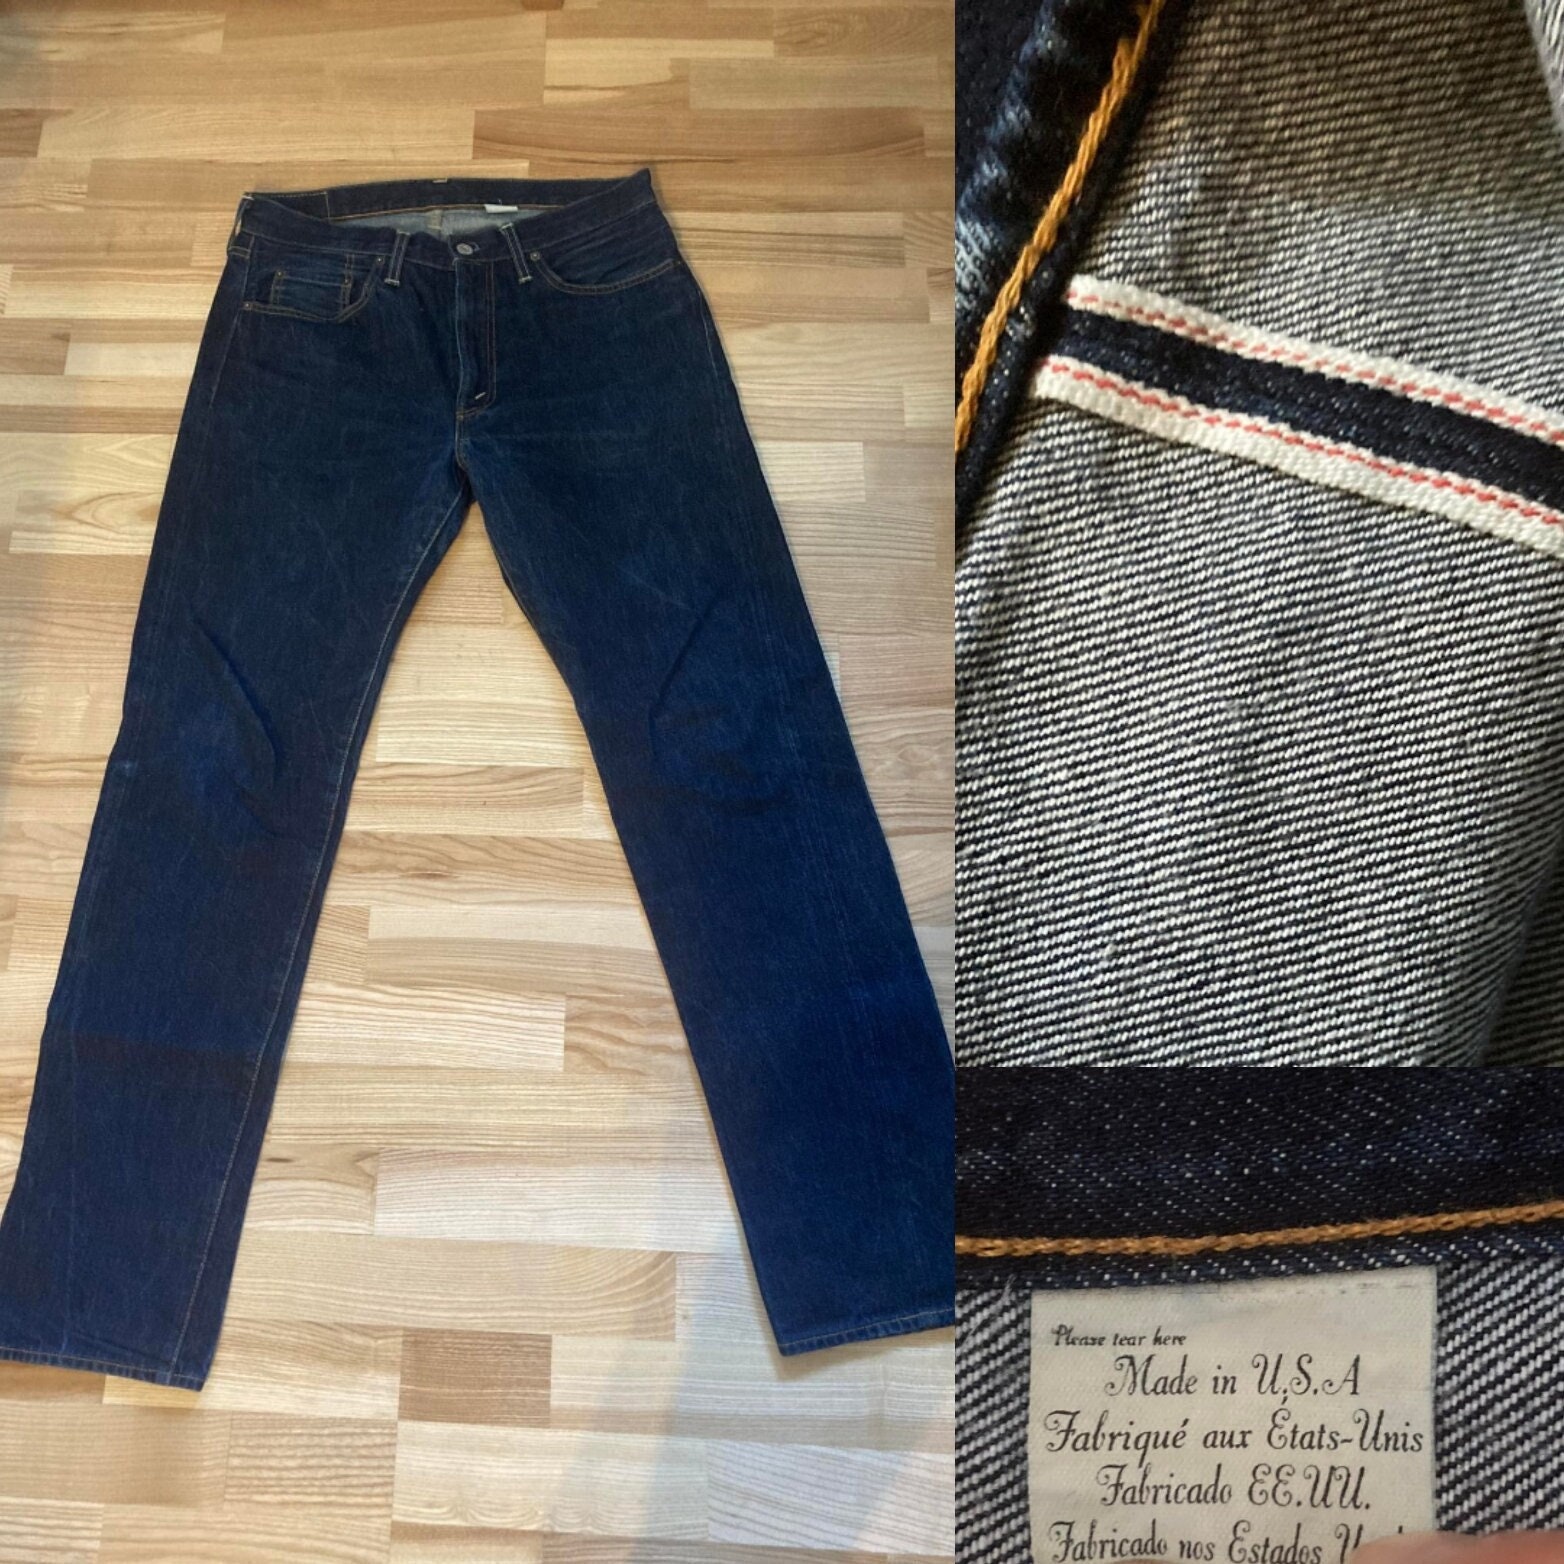 LEVIS VINTAGE CLOTHING LVC big e 37501 501xx 1937 sample